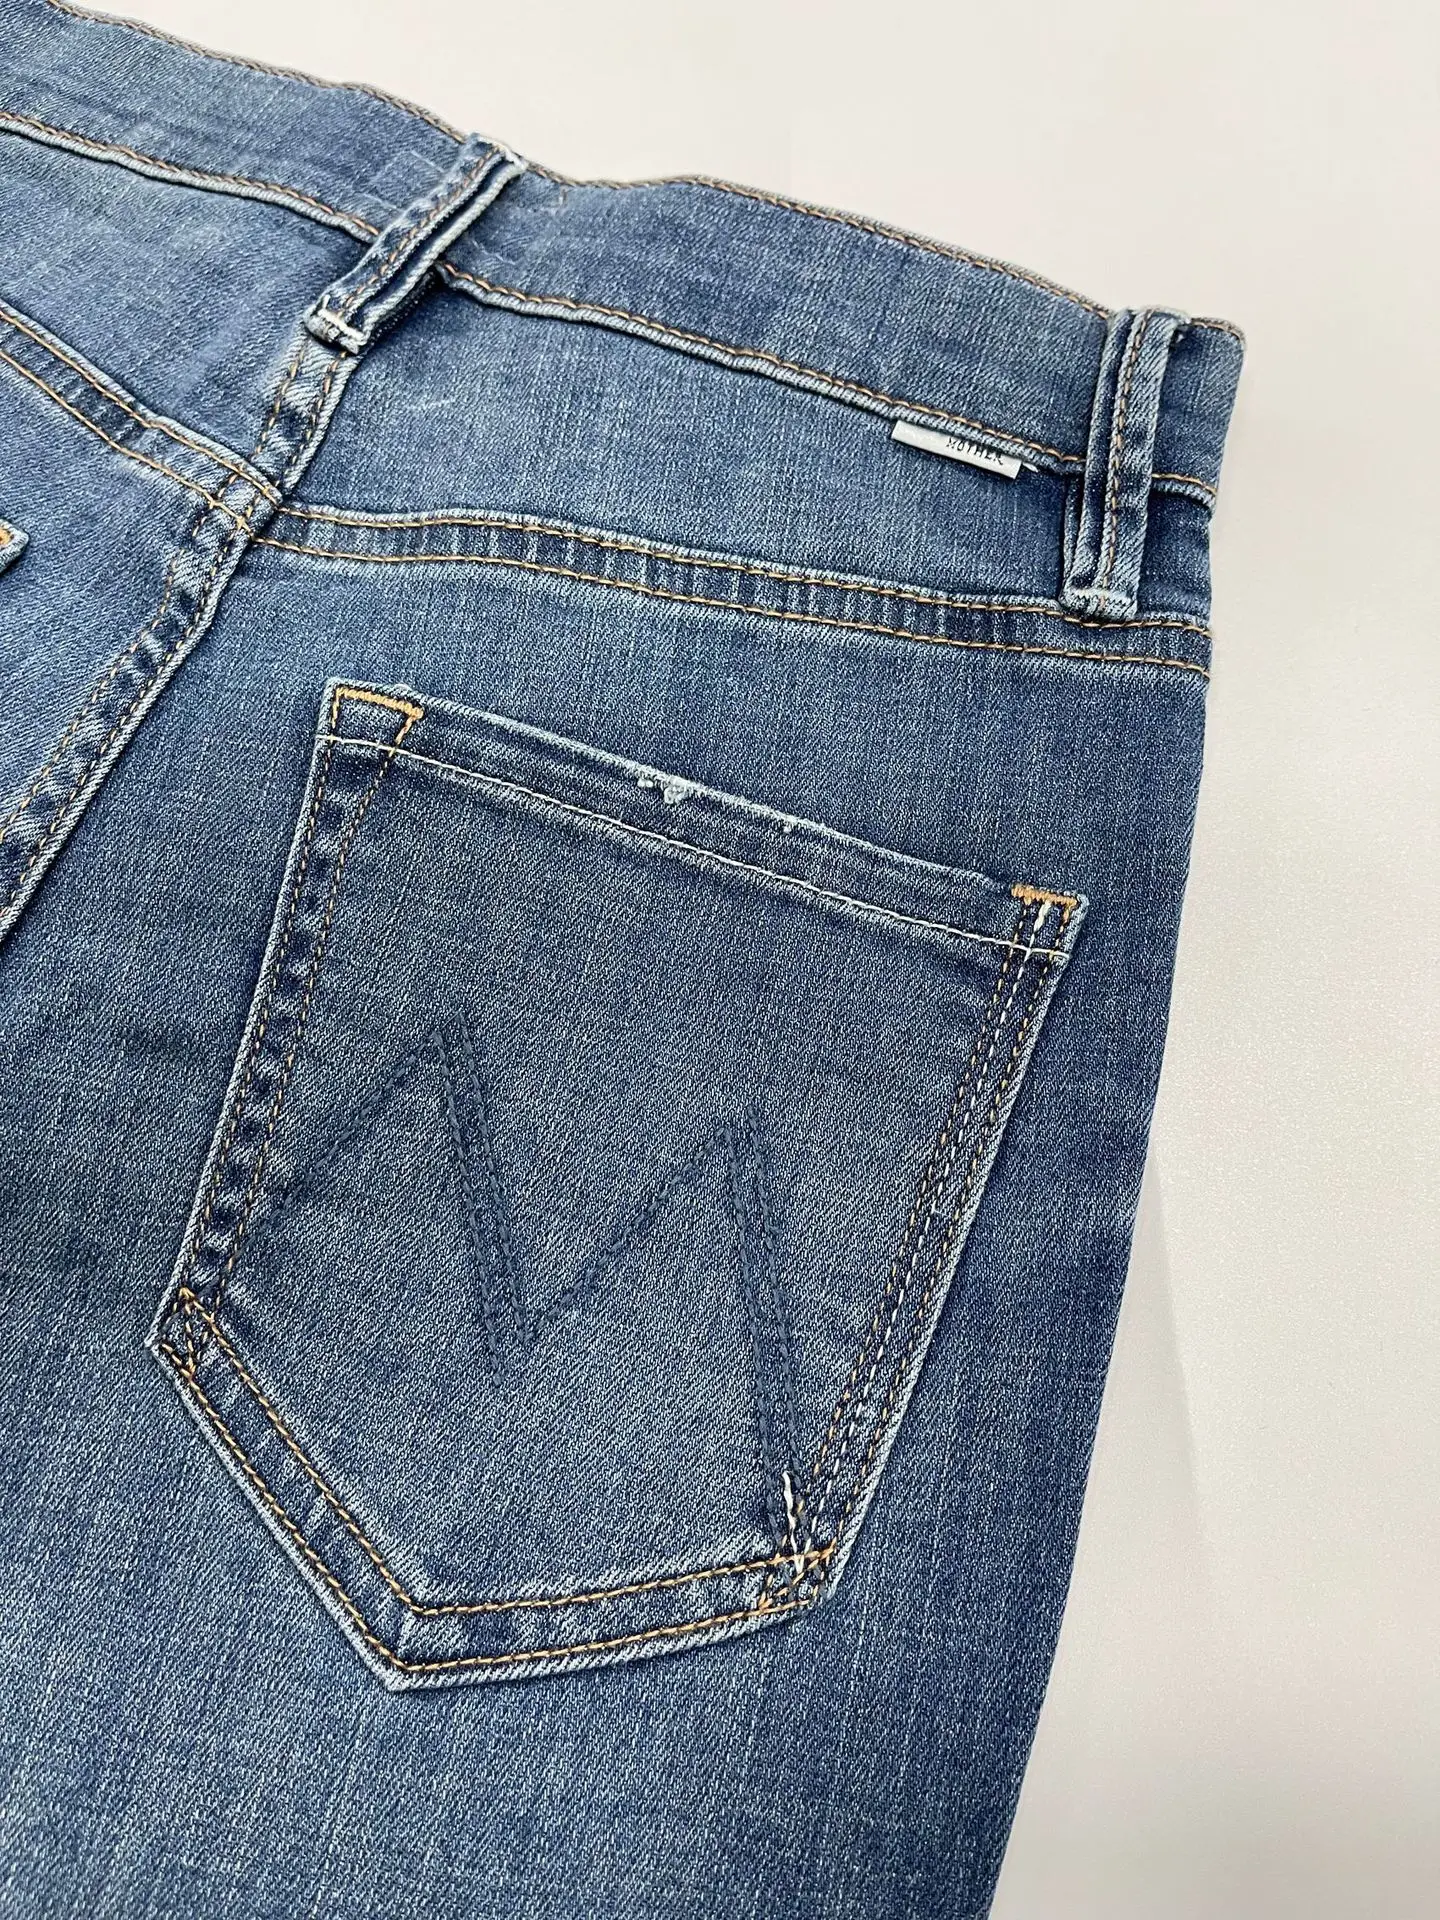 Women-high-waist-Single-breasted-denim-pants-lady-slim-straight-jeans-ankle-length-jeans.jpg